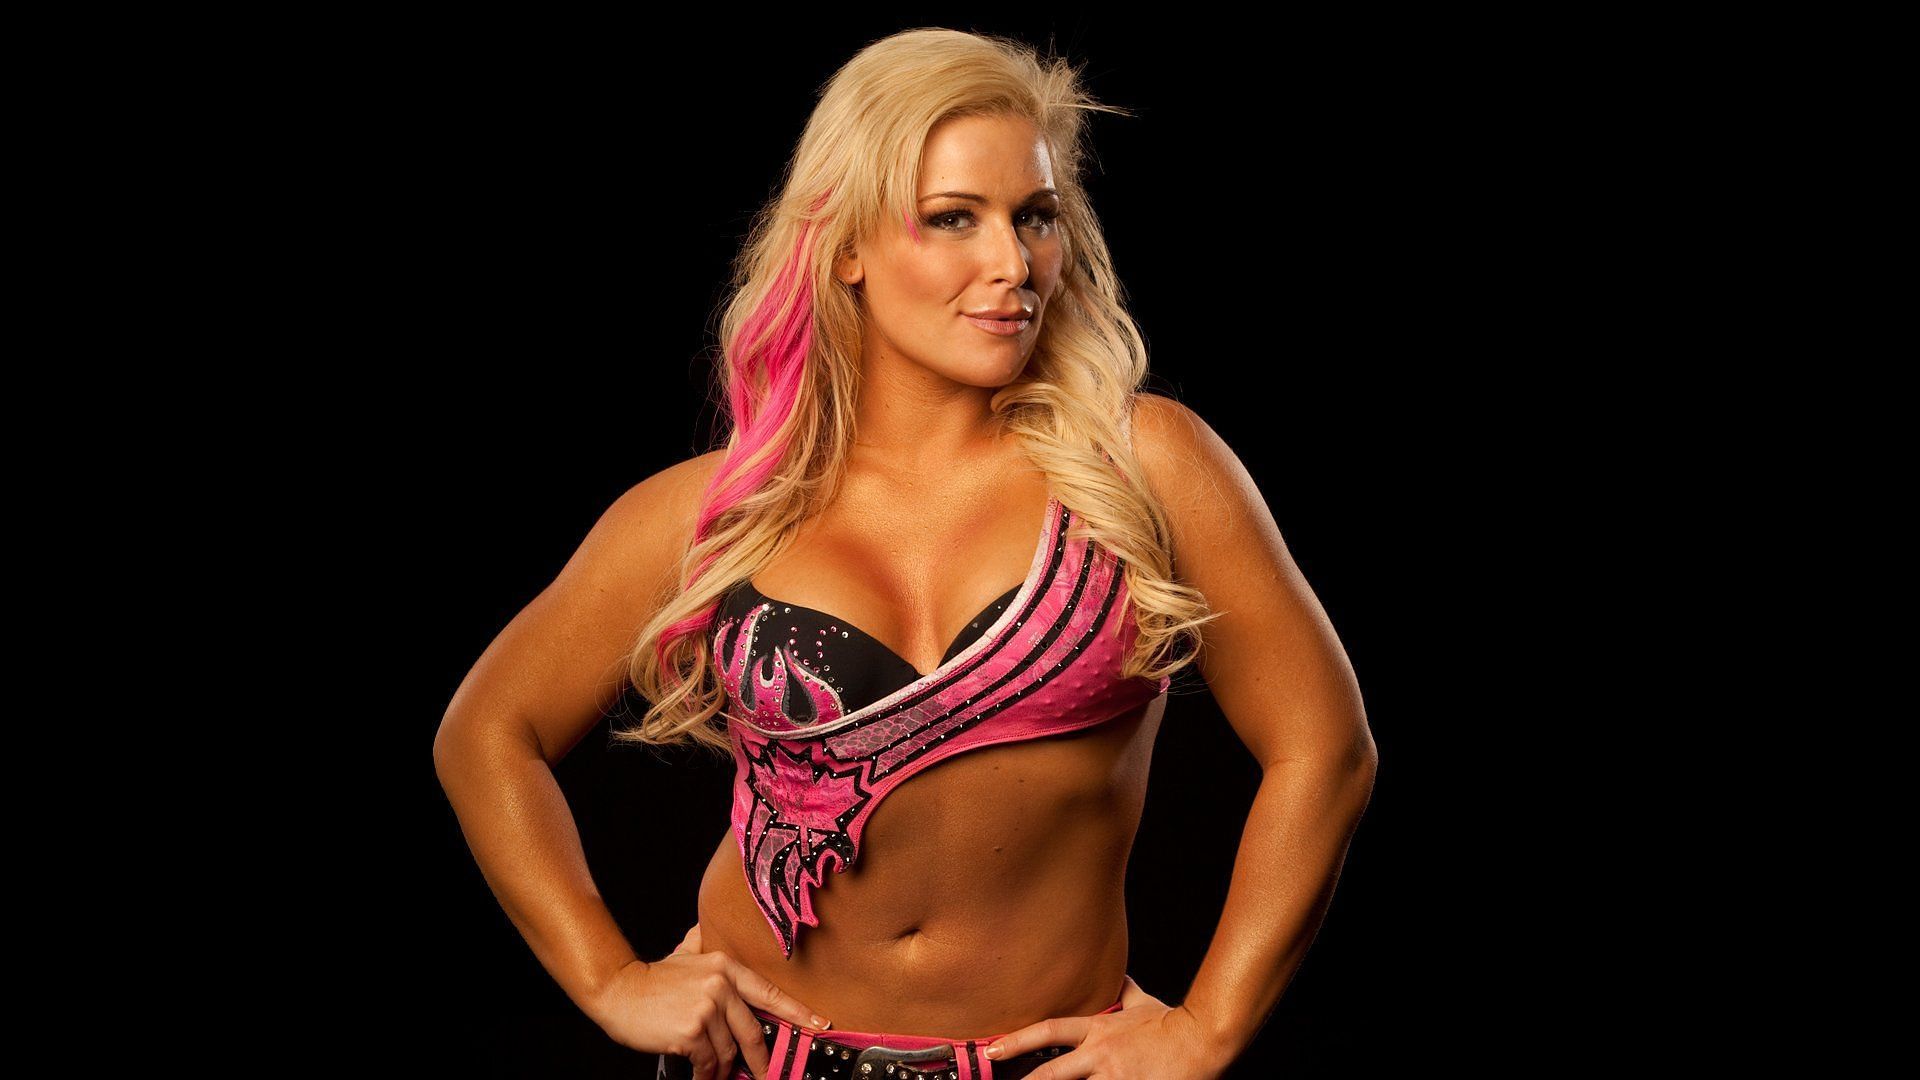 Natalya is a former WWE Divas Champion